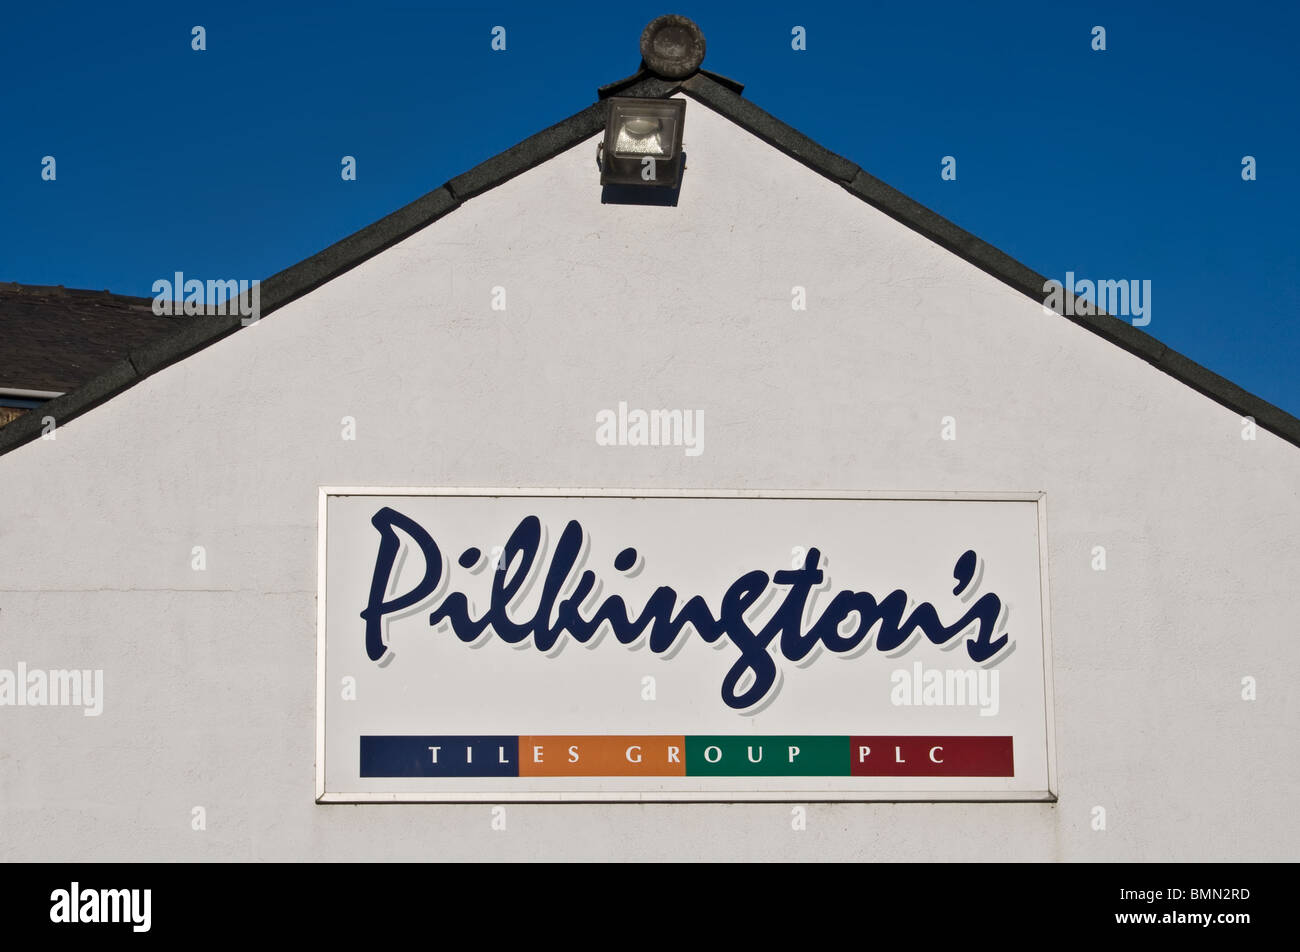 Pilkingtons Tiles, factory shop, Salford, Greater Manchester, UK Stock Photo - Alamy